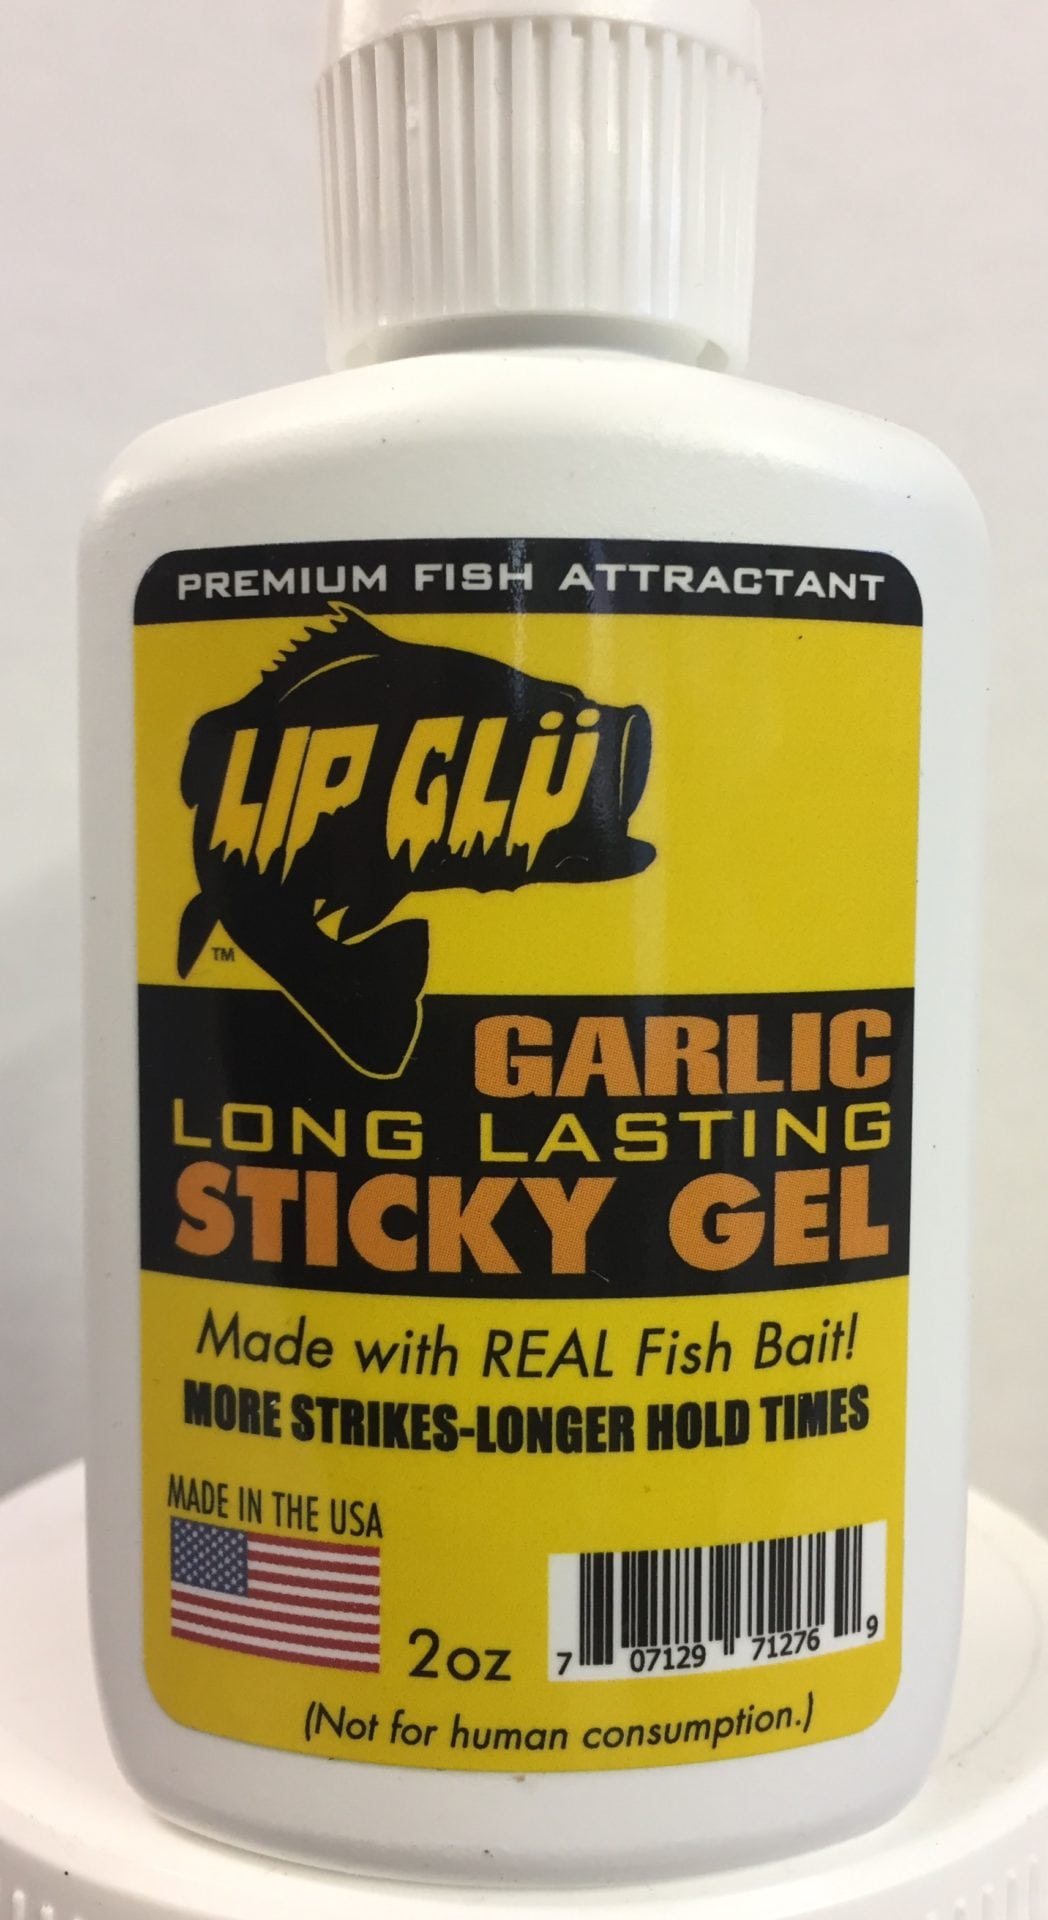 A bottle of garlic long lasting sticky gel